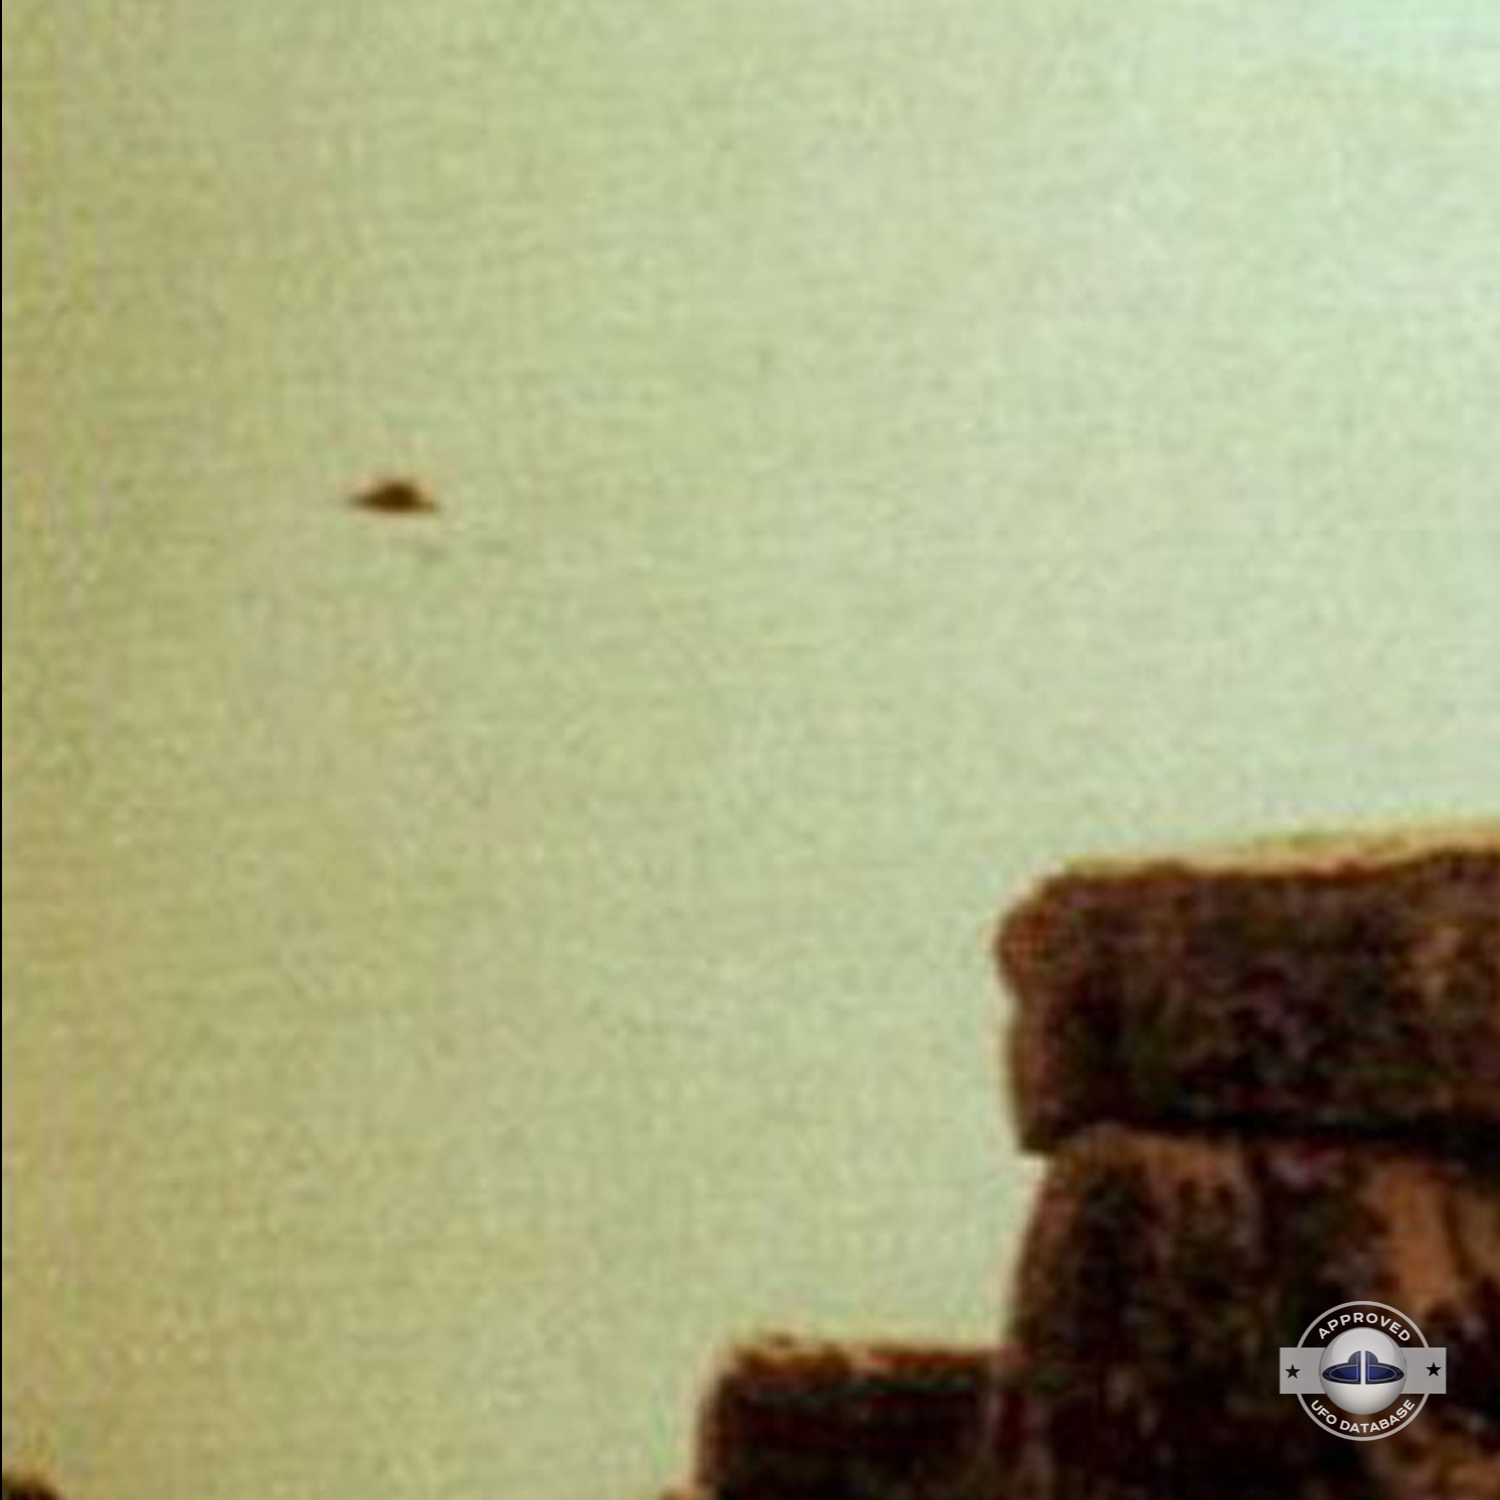 UFO Picture taken near the famous Stonehenge prehistoric monument UFO Picture #49-3